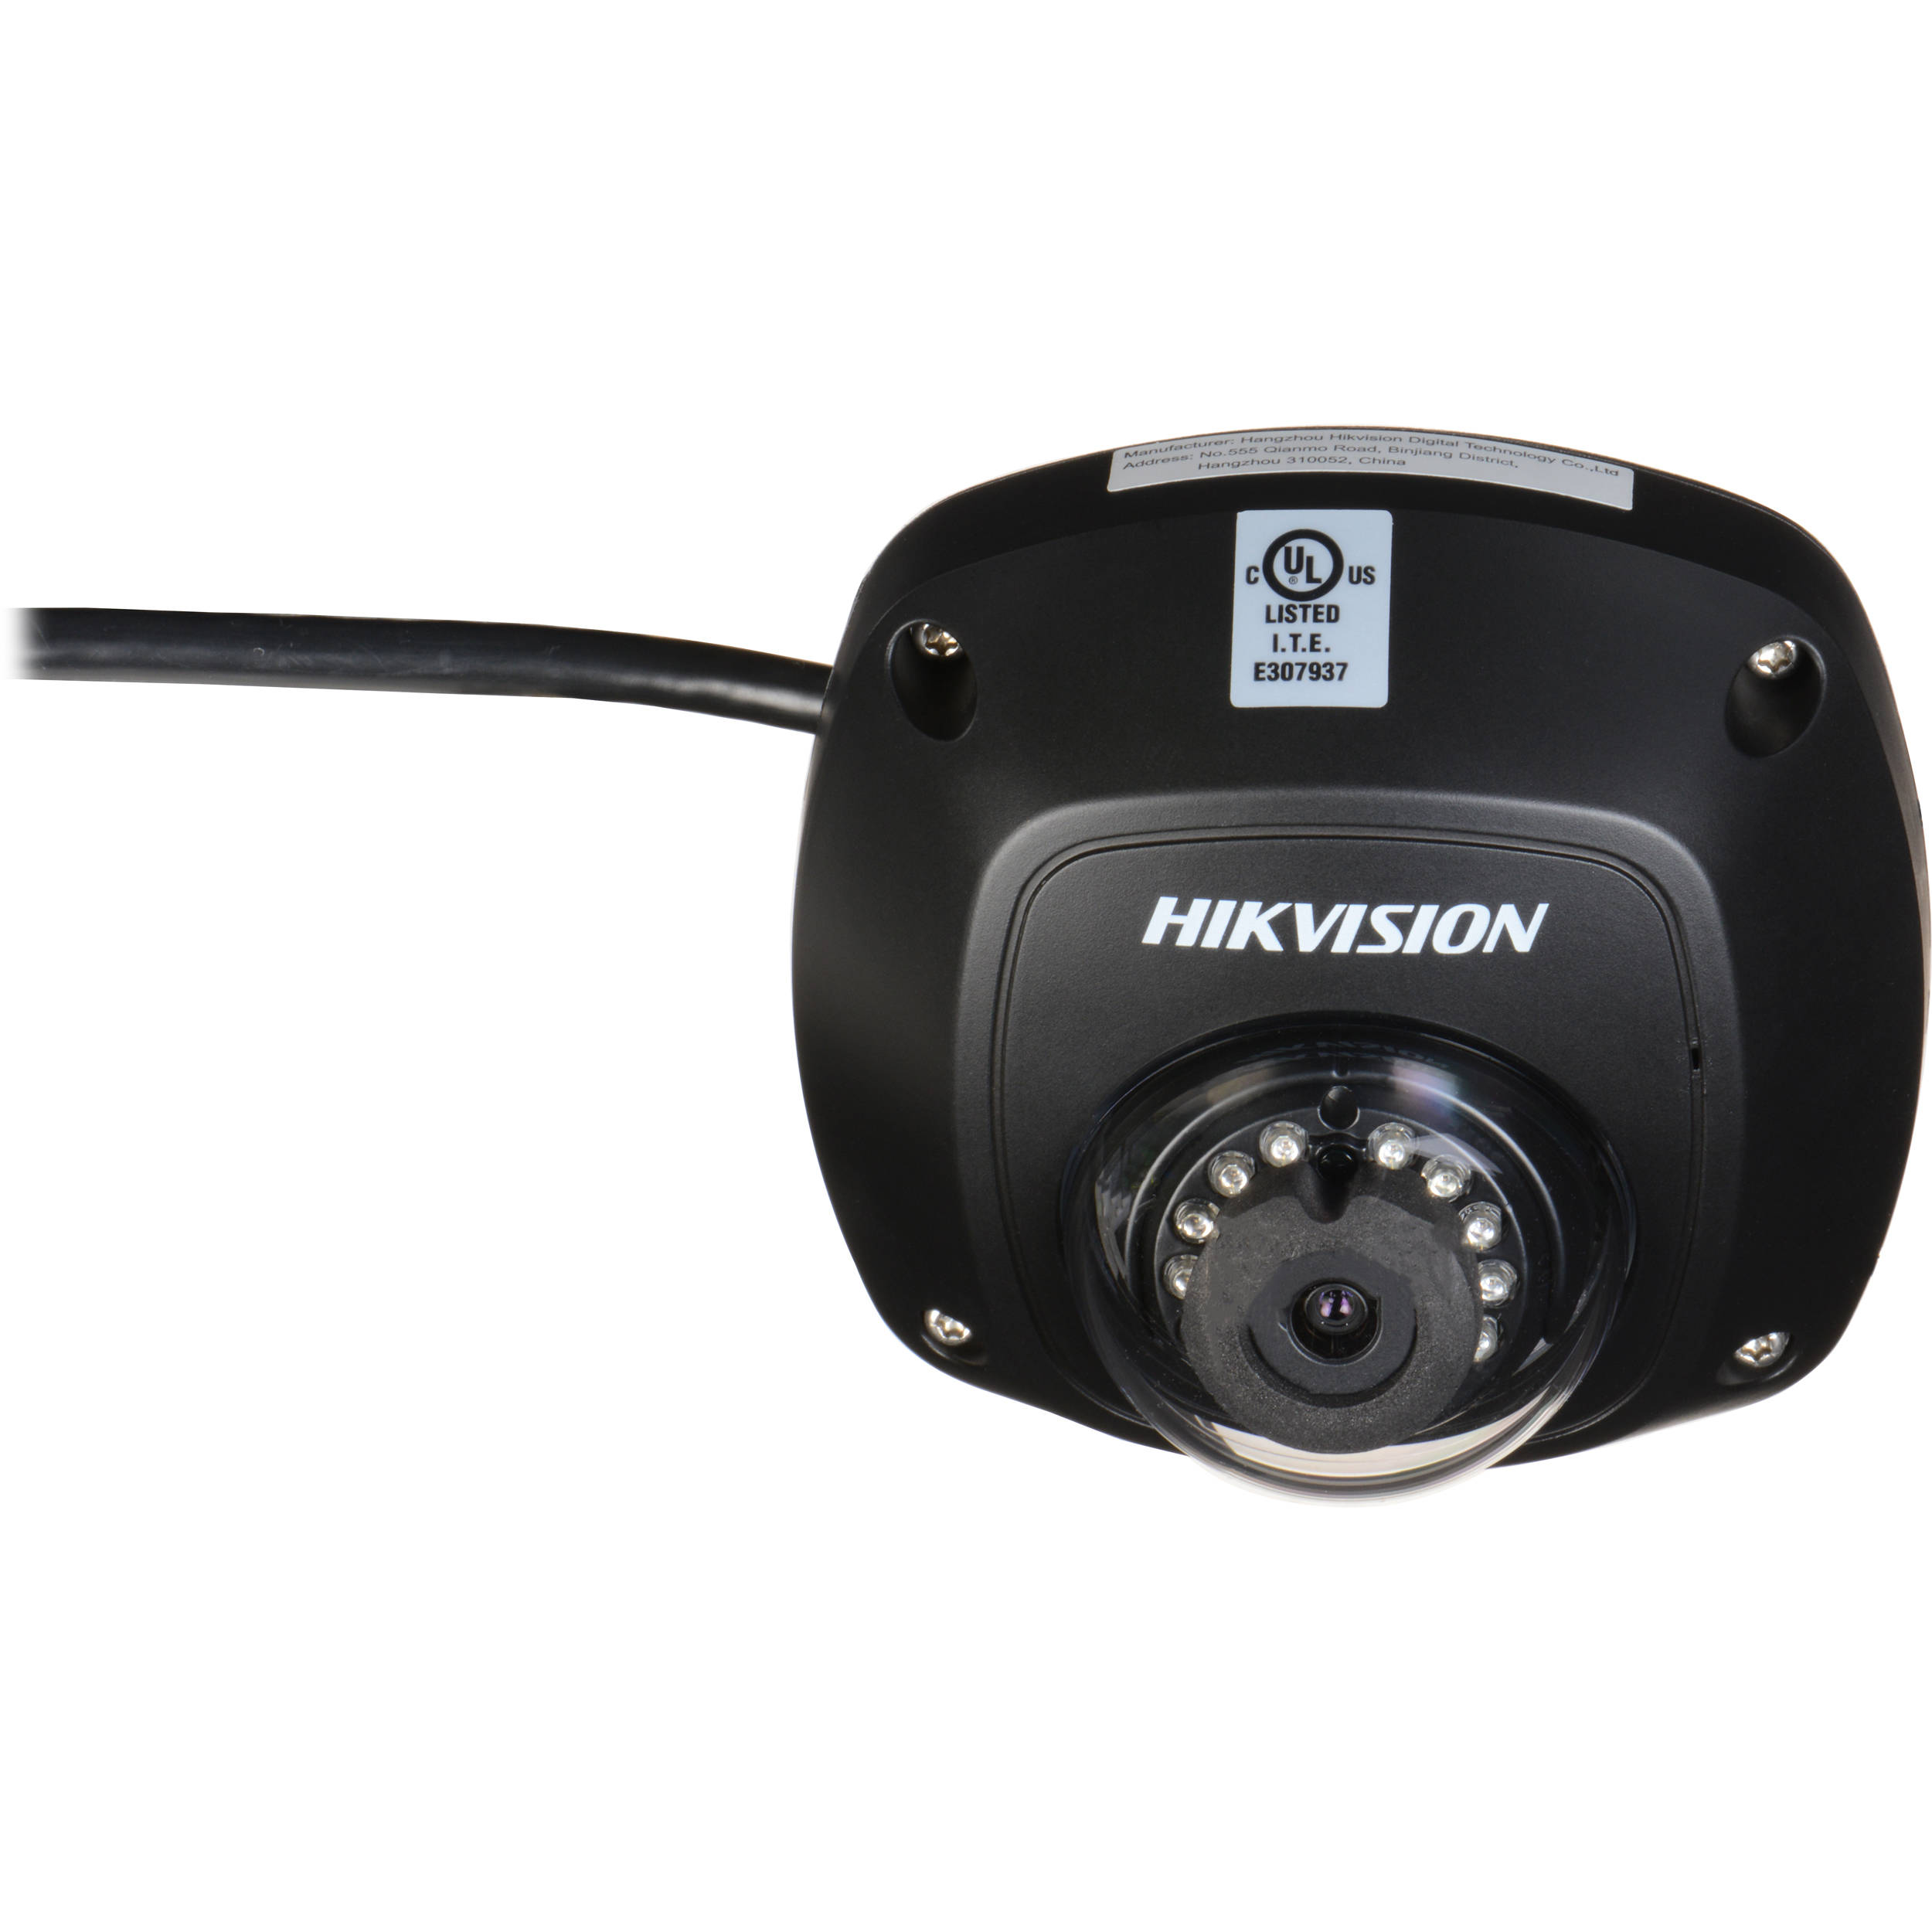 mini dome camera hikvision